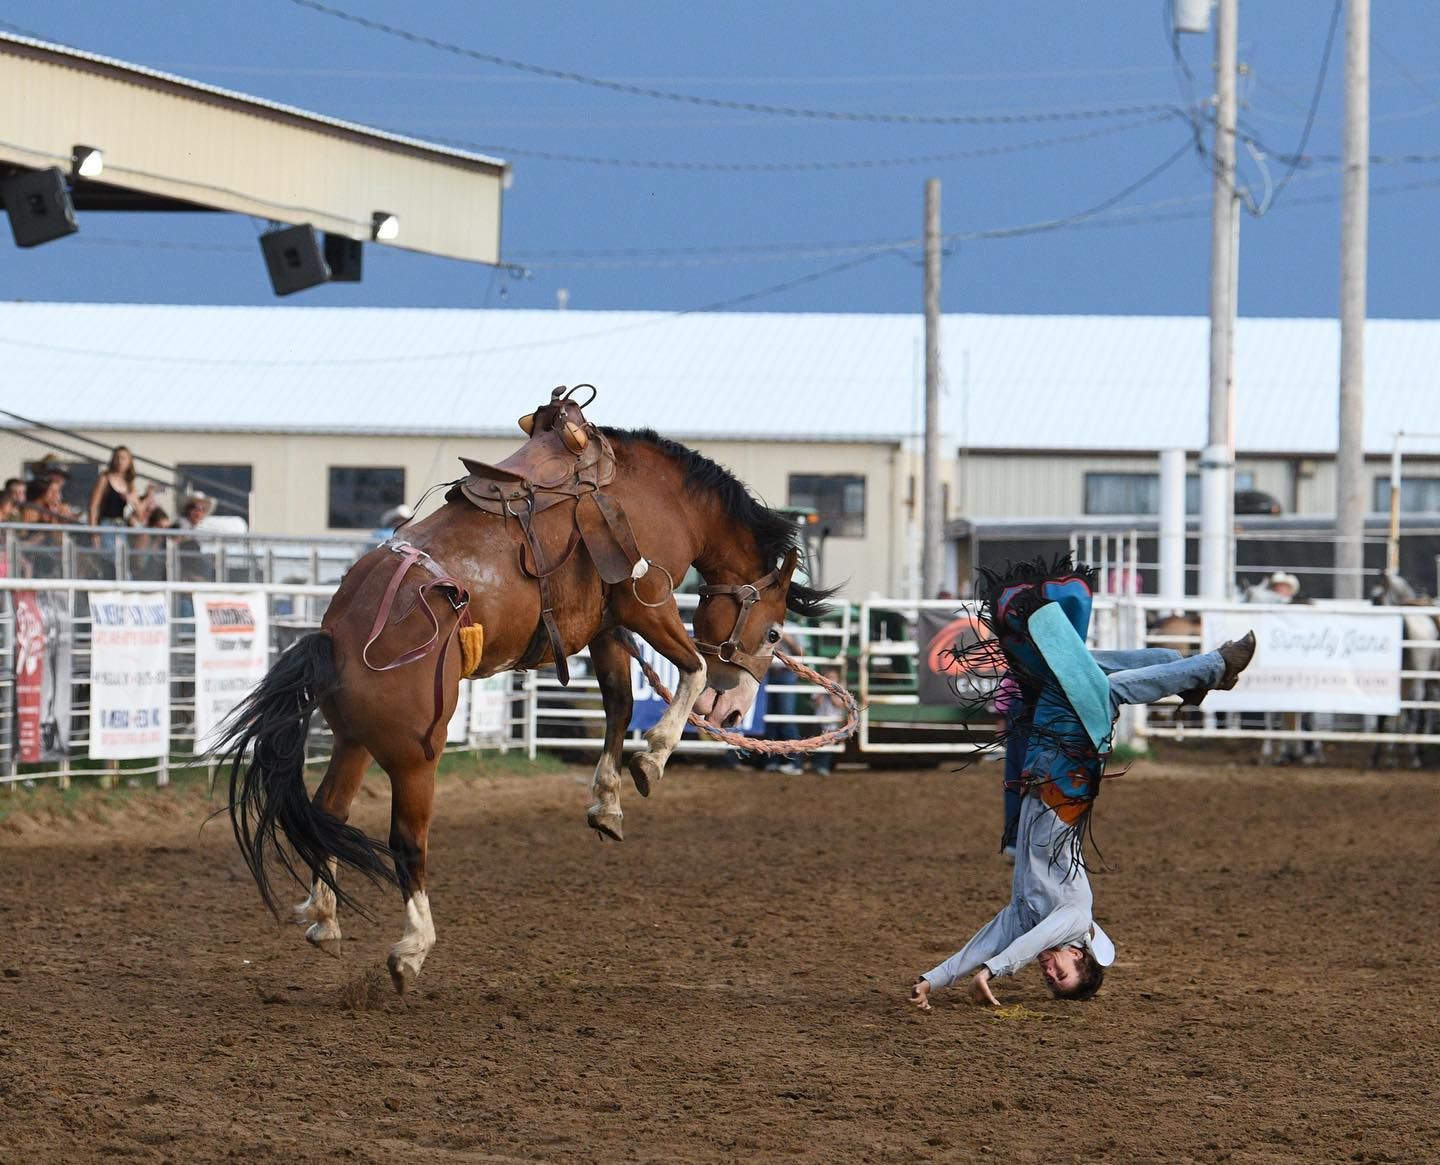 
World's Largest Amateur Rodeo: world record in Pawhuska, Oklahoma